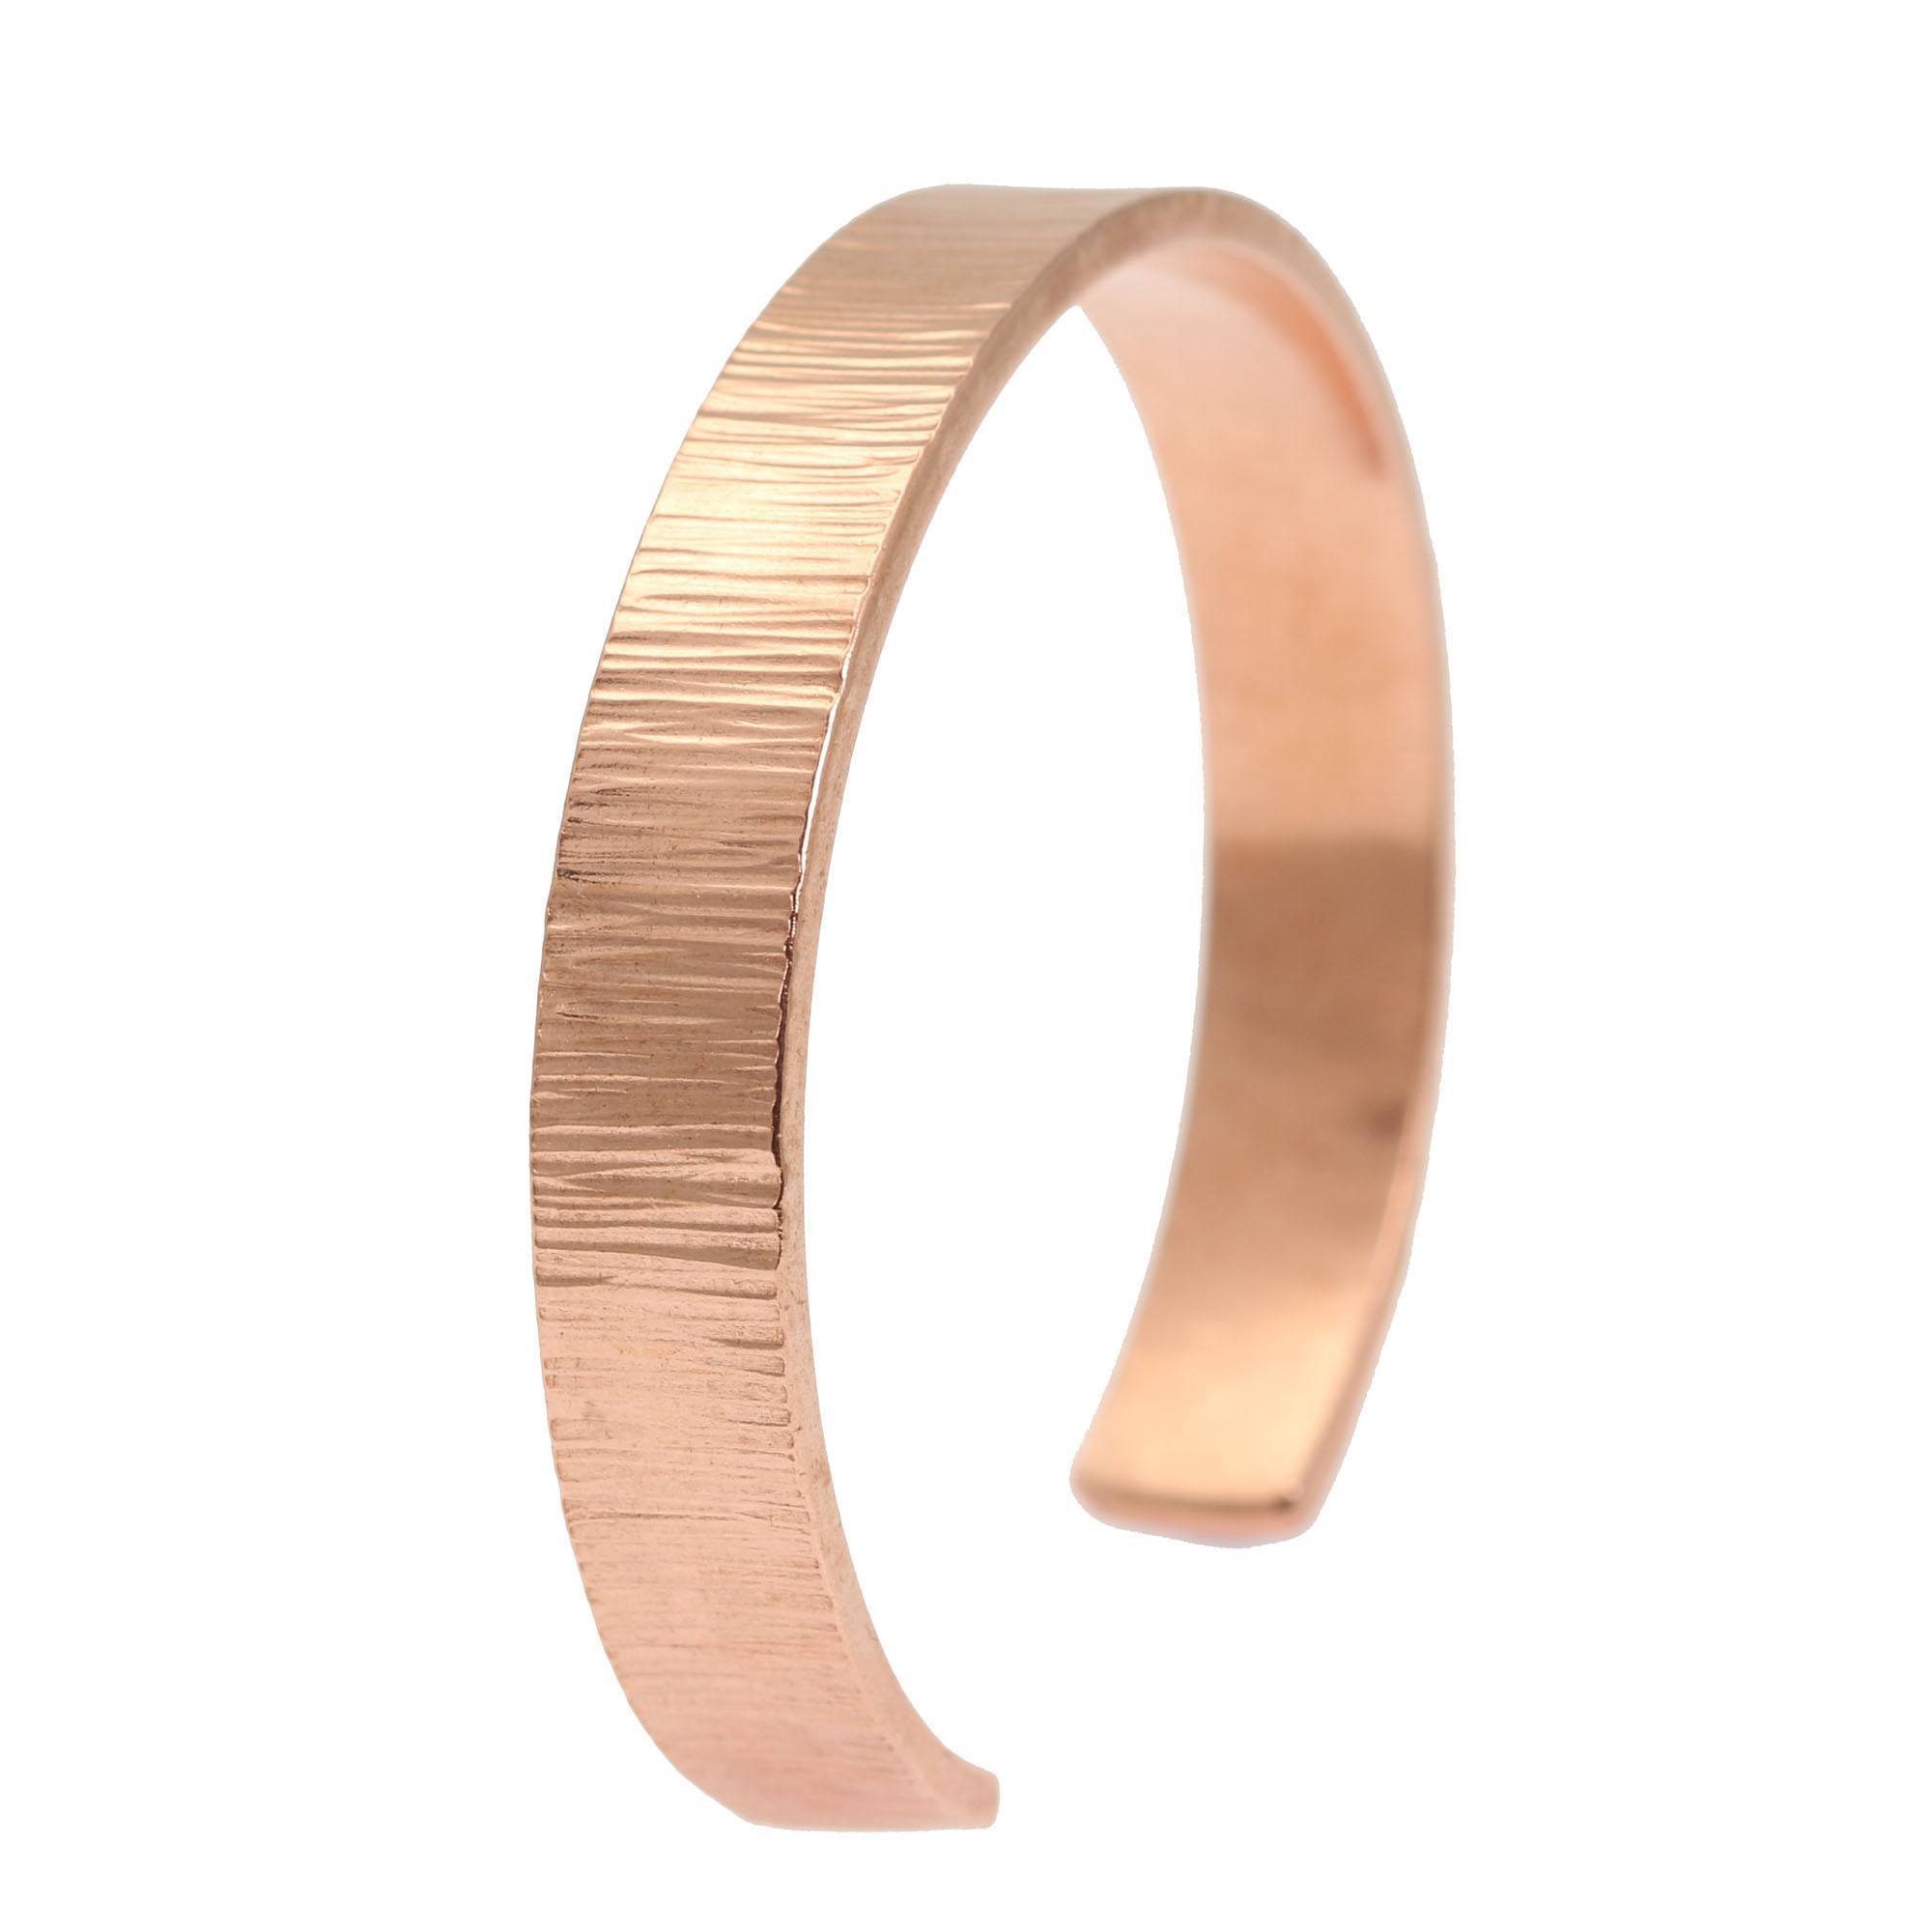 10mm Wide Chased Copper Cuff Bracelet - Solid Copper Cuff